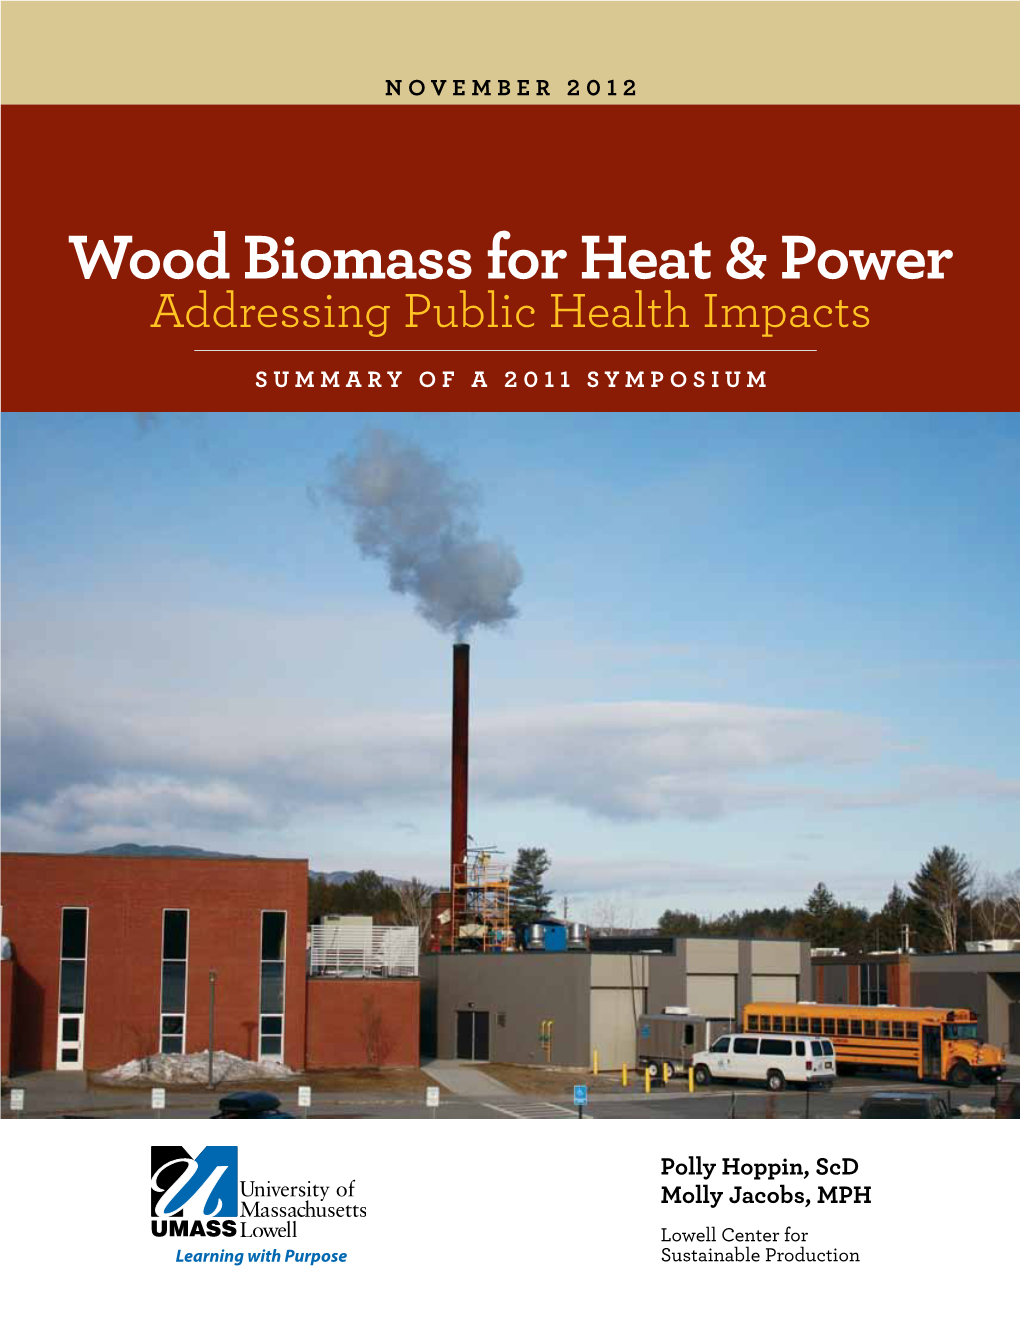 Wood Biomass for Heat & Power: Addressing Public Health Impacts